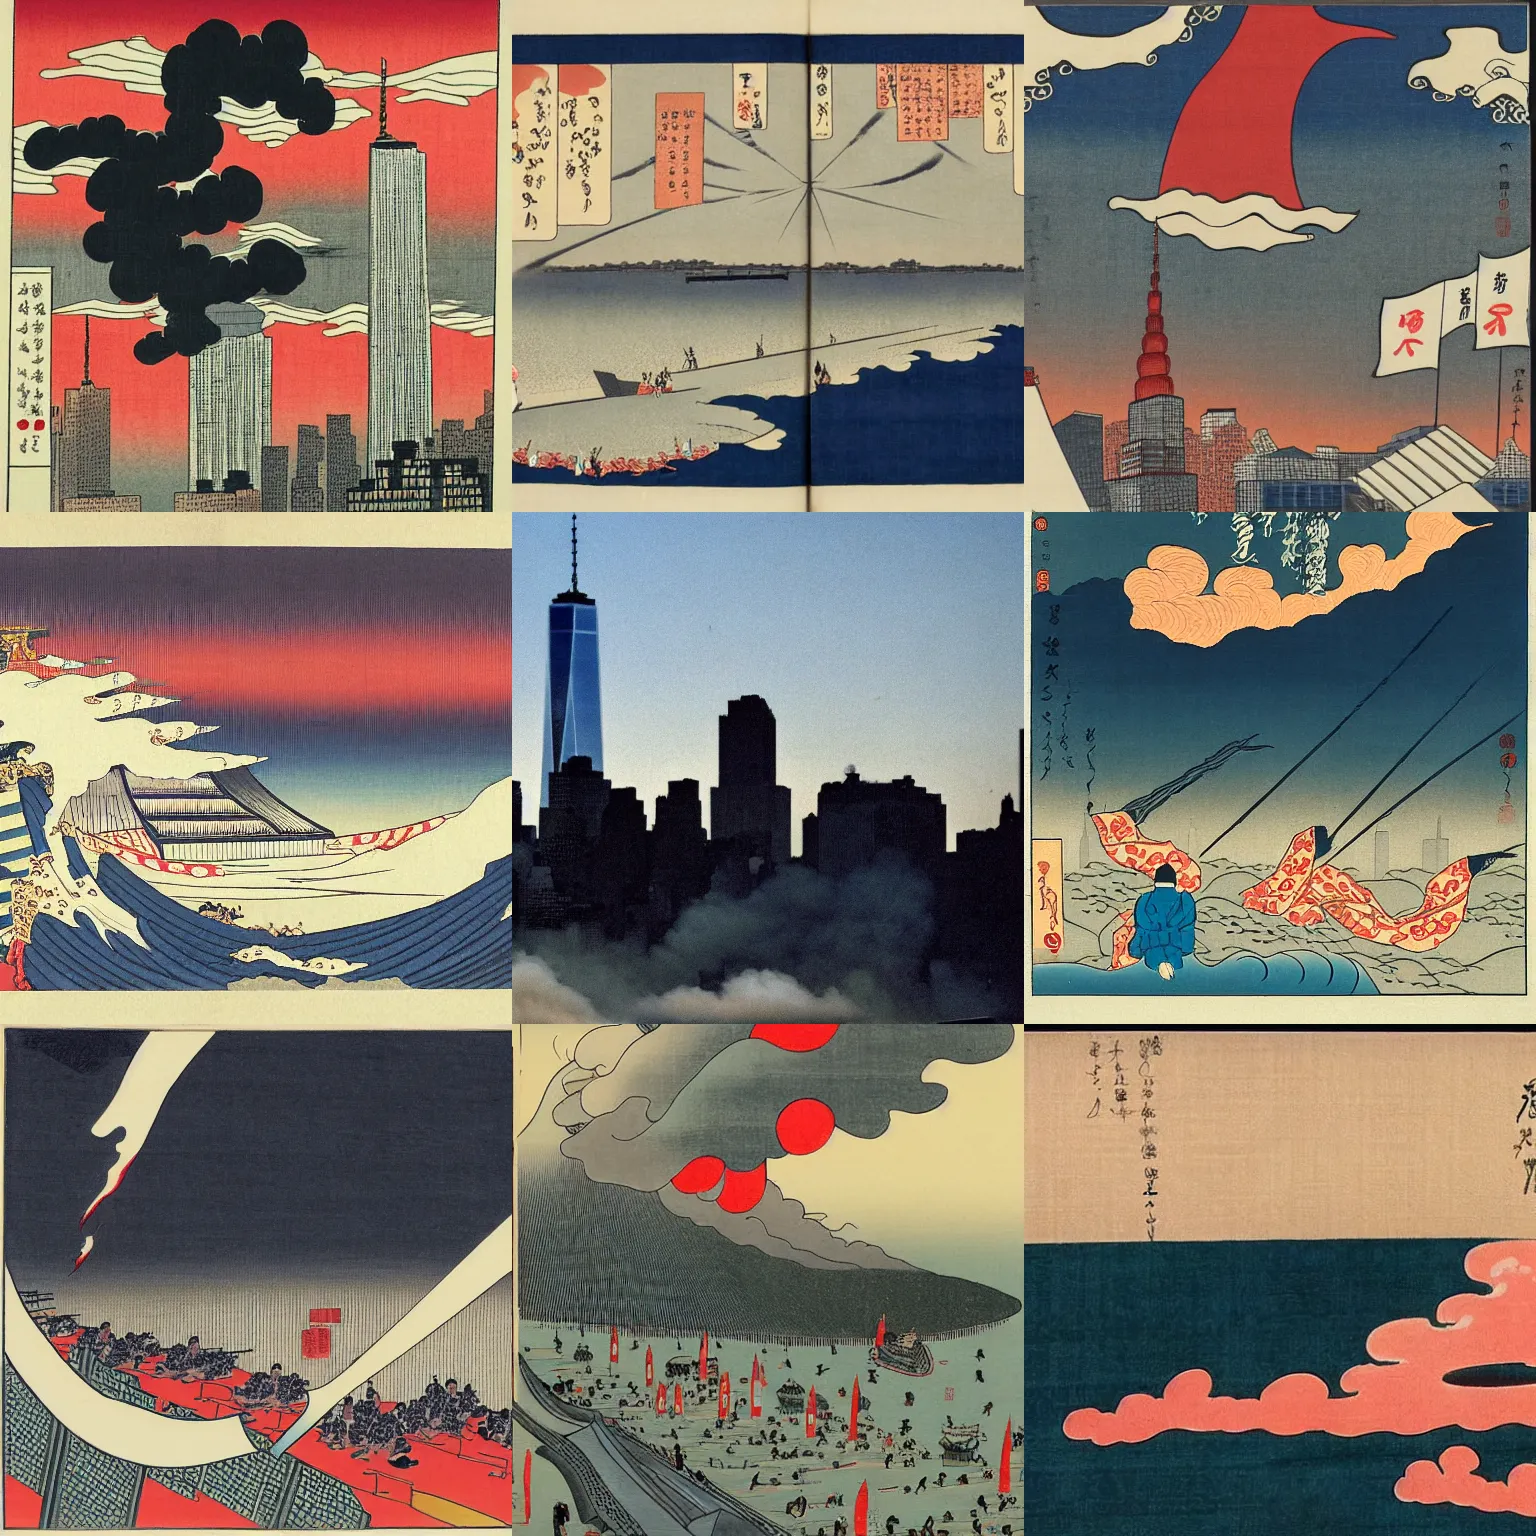 Prompt: 9 / 1 1 attacks, ukiyo - e style, new york city, buildings and smoke